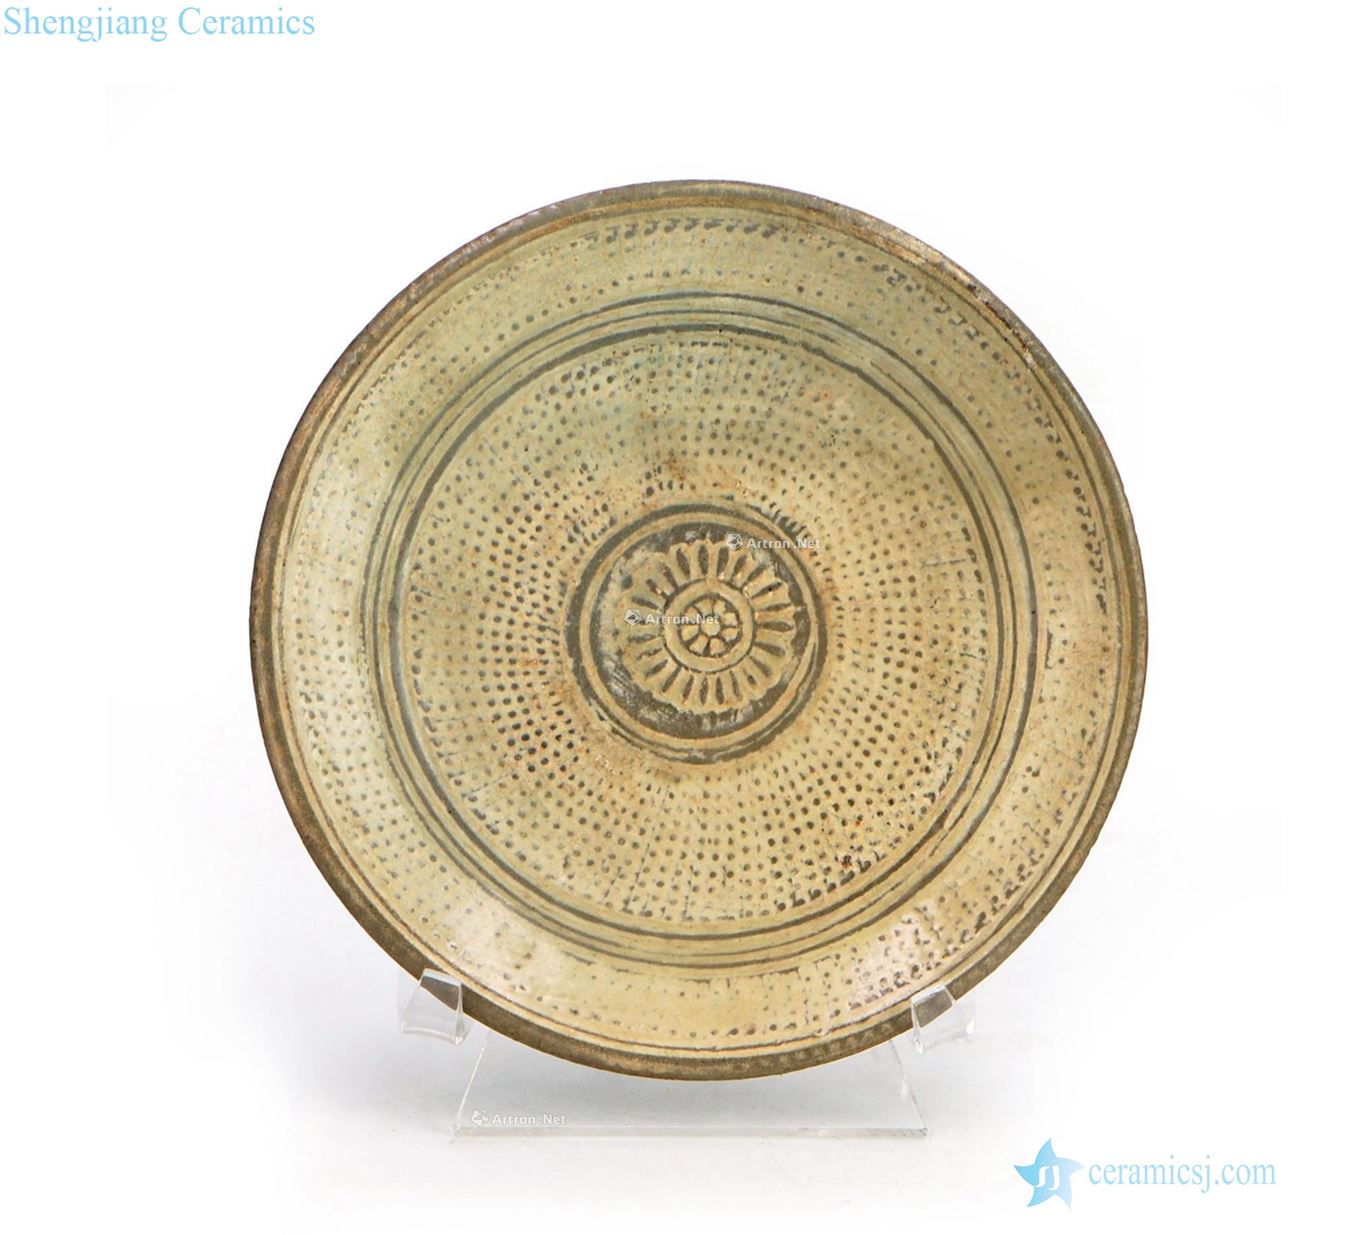 Koryo period (918-1392), celadon printing plate